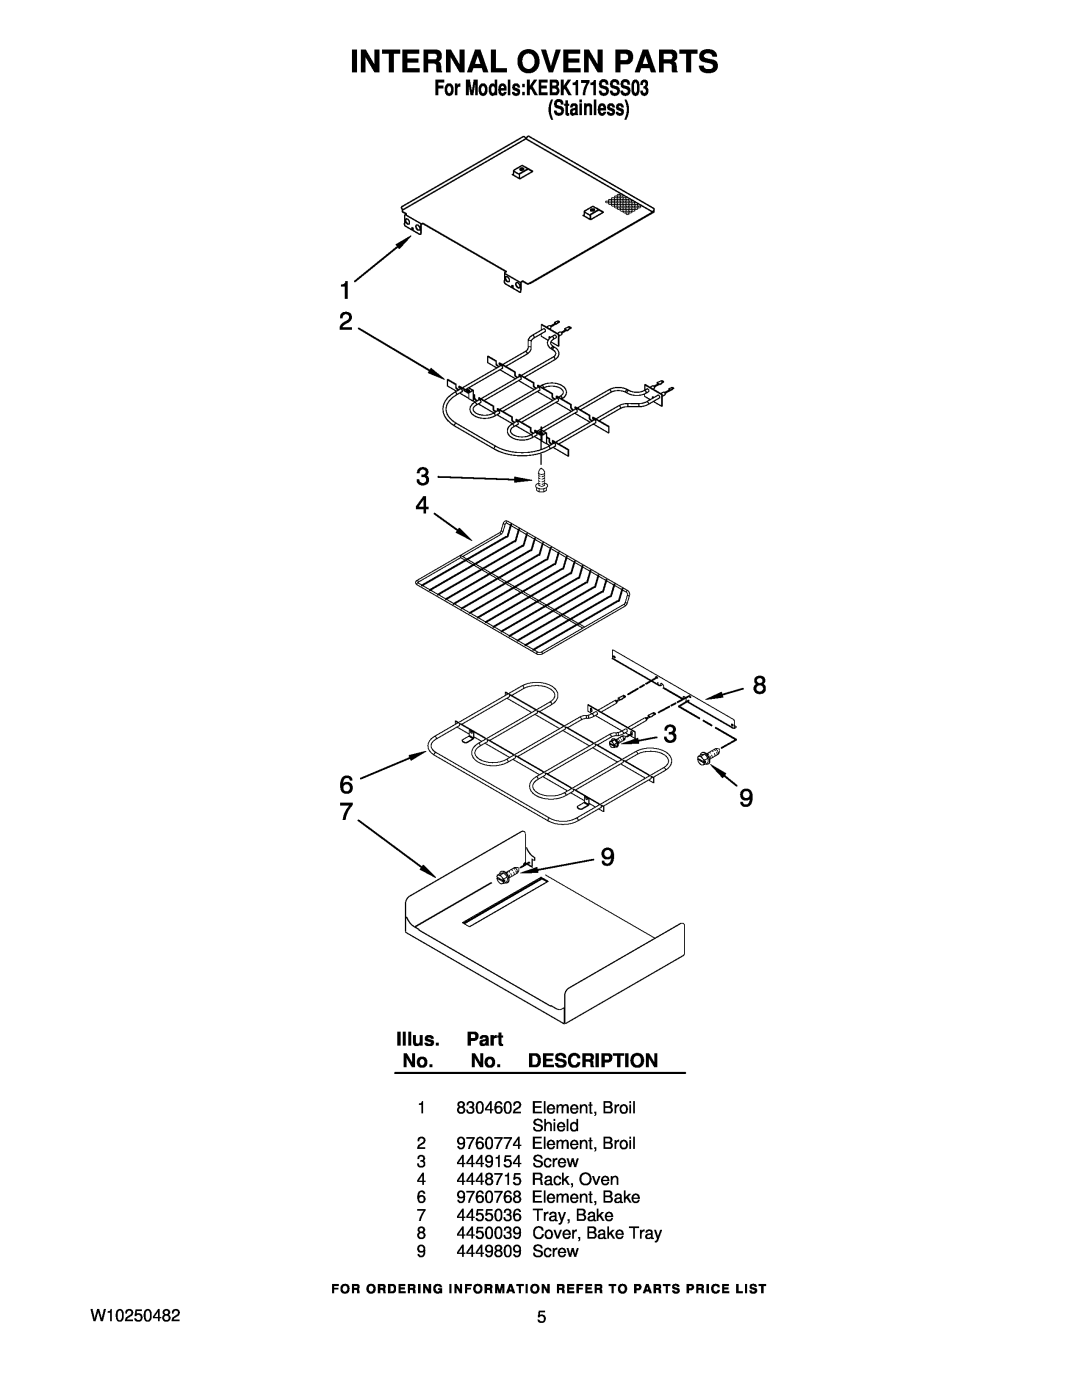 KitchenAid W10250482 manual Internal Oven Parts, Illus. Part No. No. DESCRIPTION, For ModelsKEBK171SSS03 Stainless 